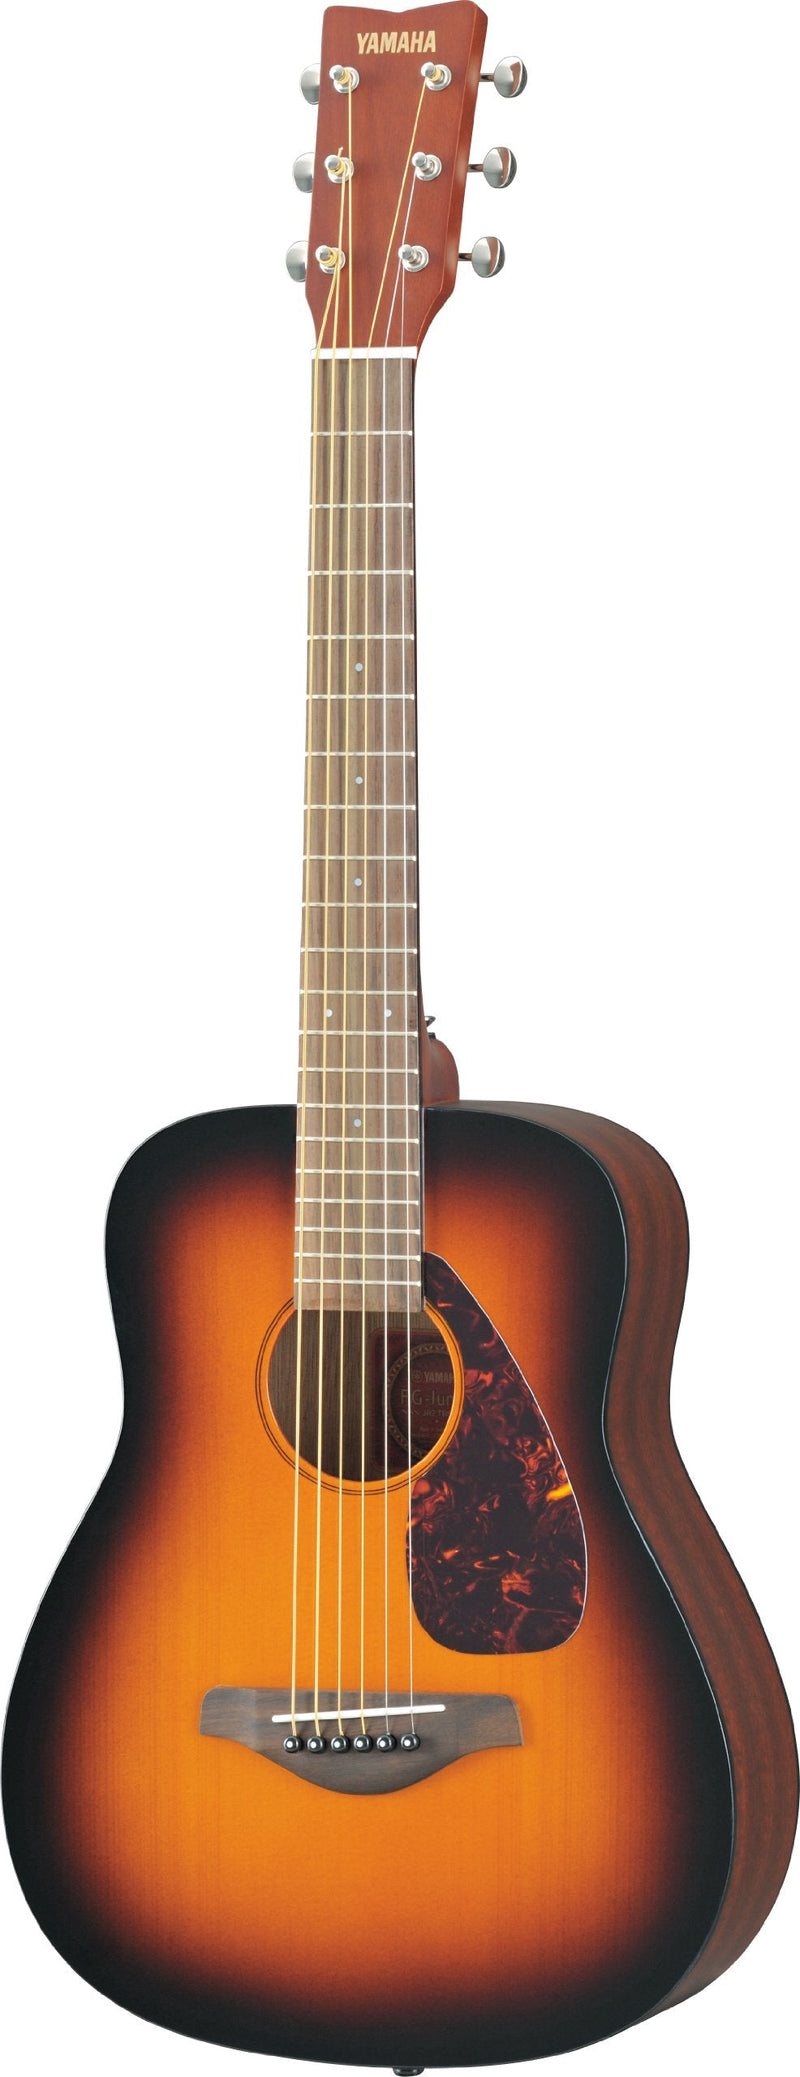 Yamaha JR2 TBS 3/4 Acoustic Guitar Spokane sale Hoffman Music 0026133